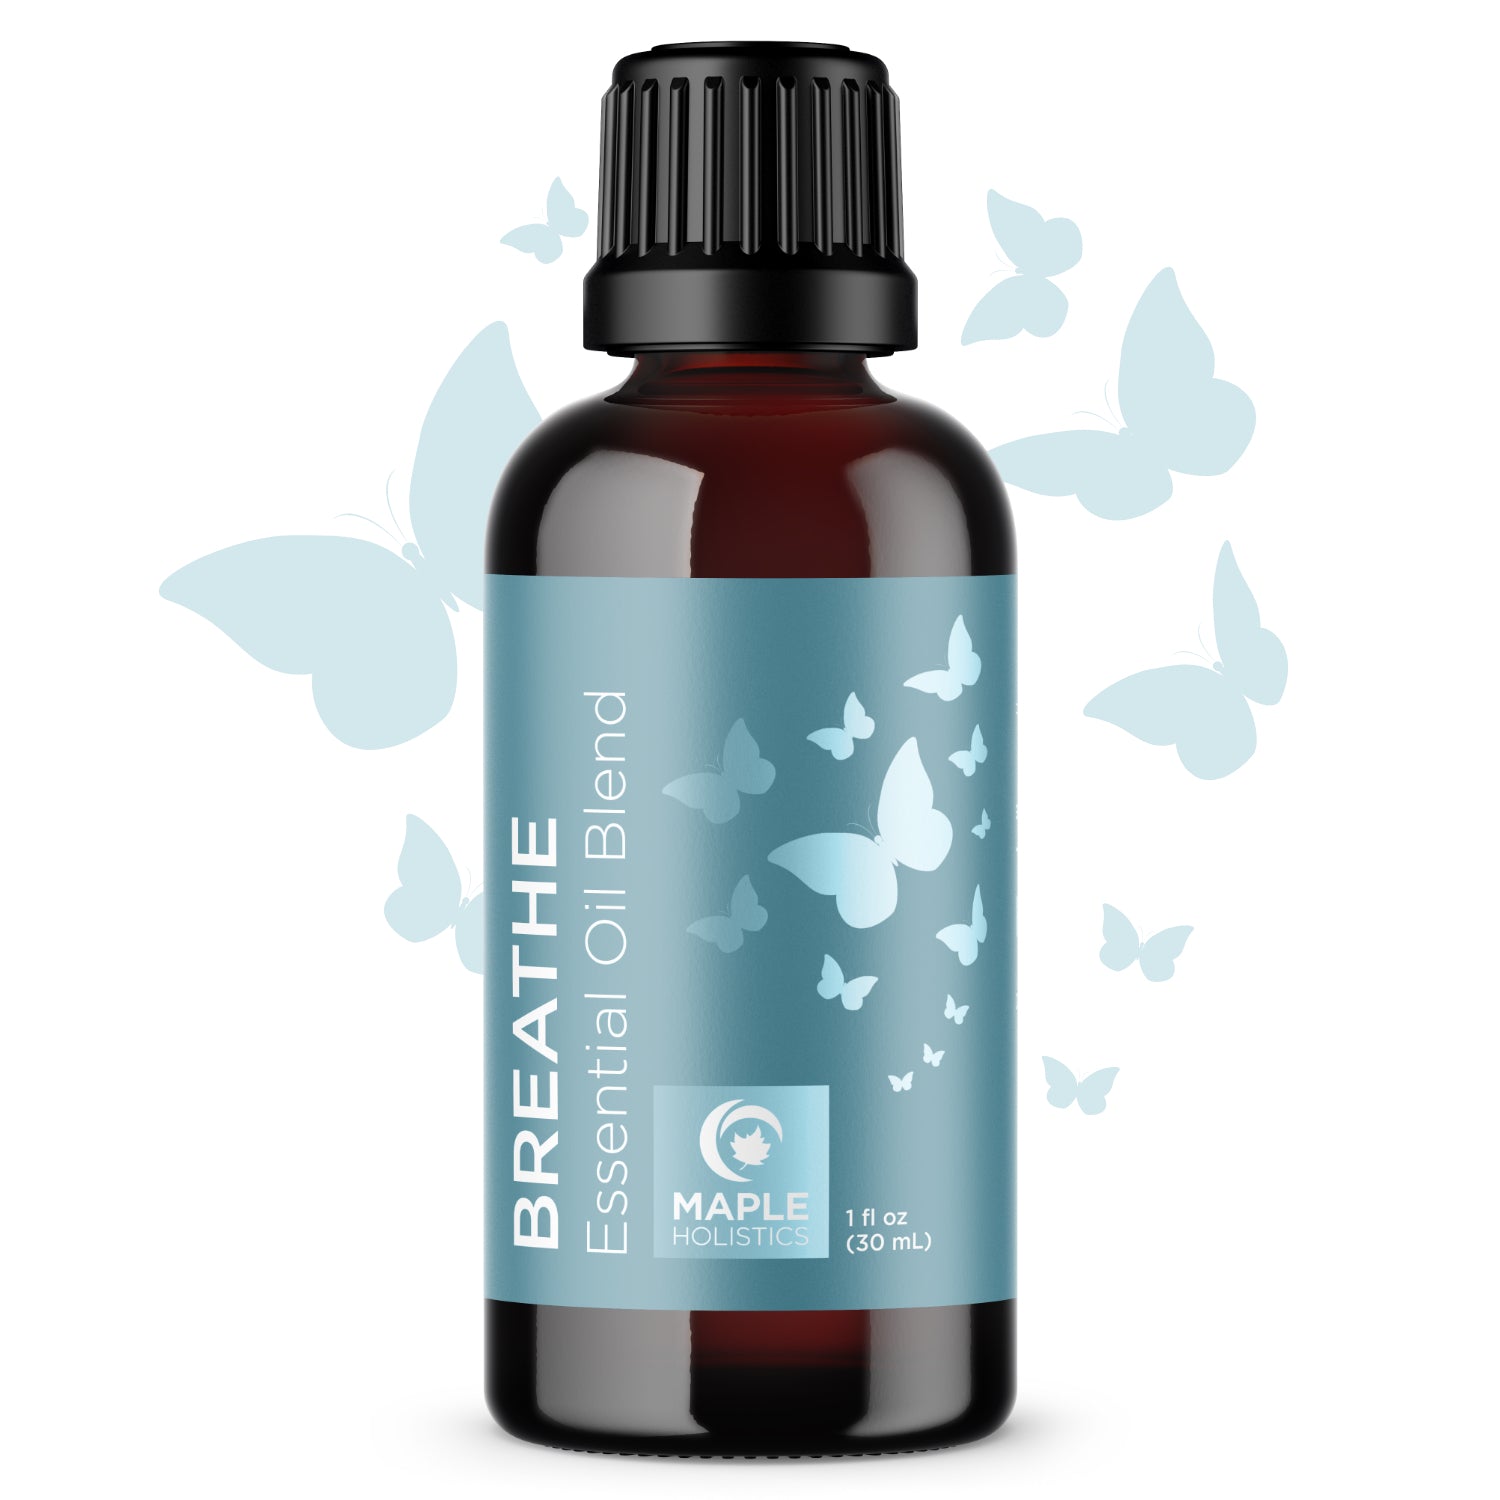 Maple Holistics Pure Lavender Essential Oil 4oz - Undiluted, Aromatherapy,  for Hair, Skin, Sleep, Diffuser, Bath